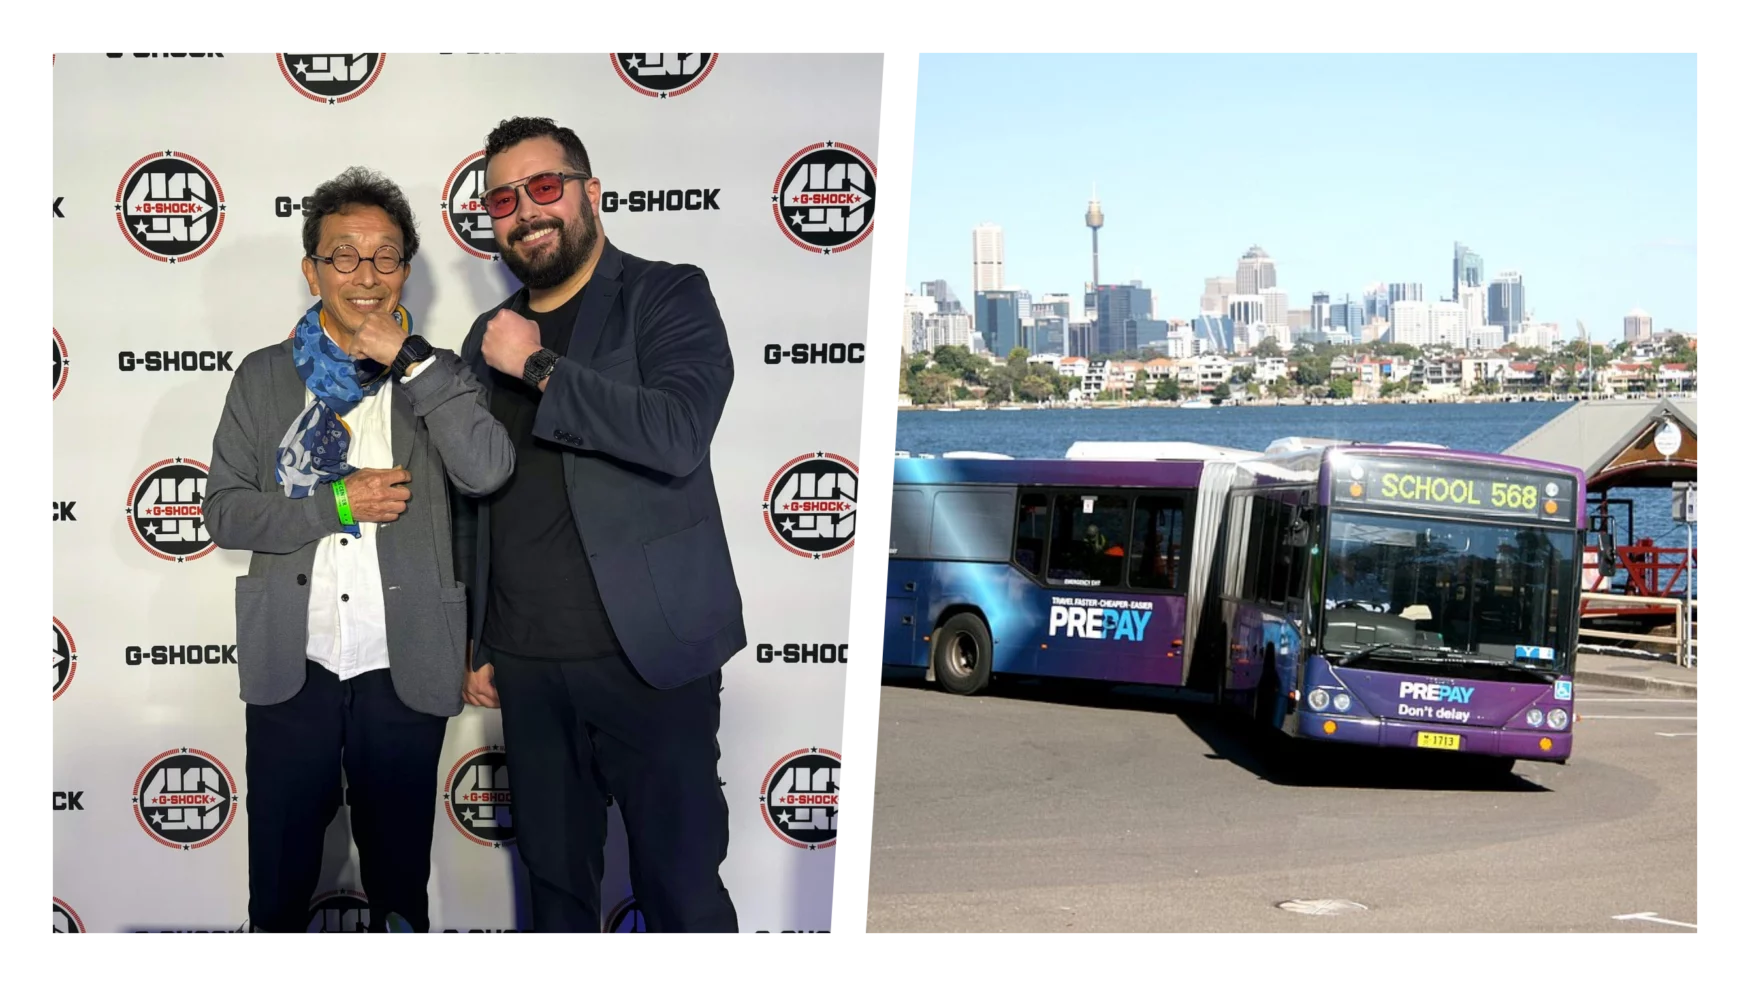 The “Father of G-Shock” Kikuo Ibe reveals G-Shock testing secrets, including an Australian bus